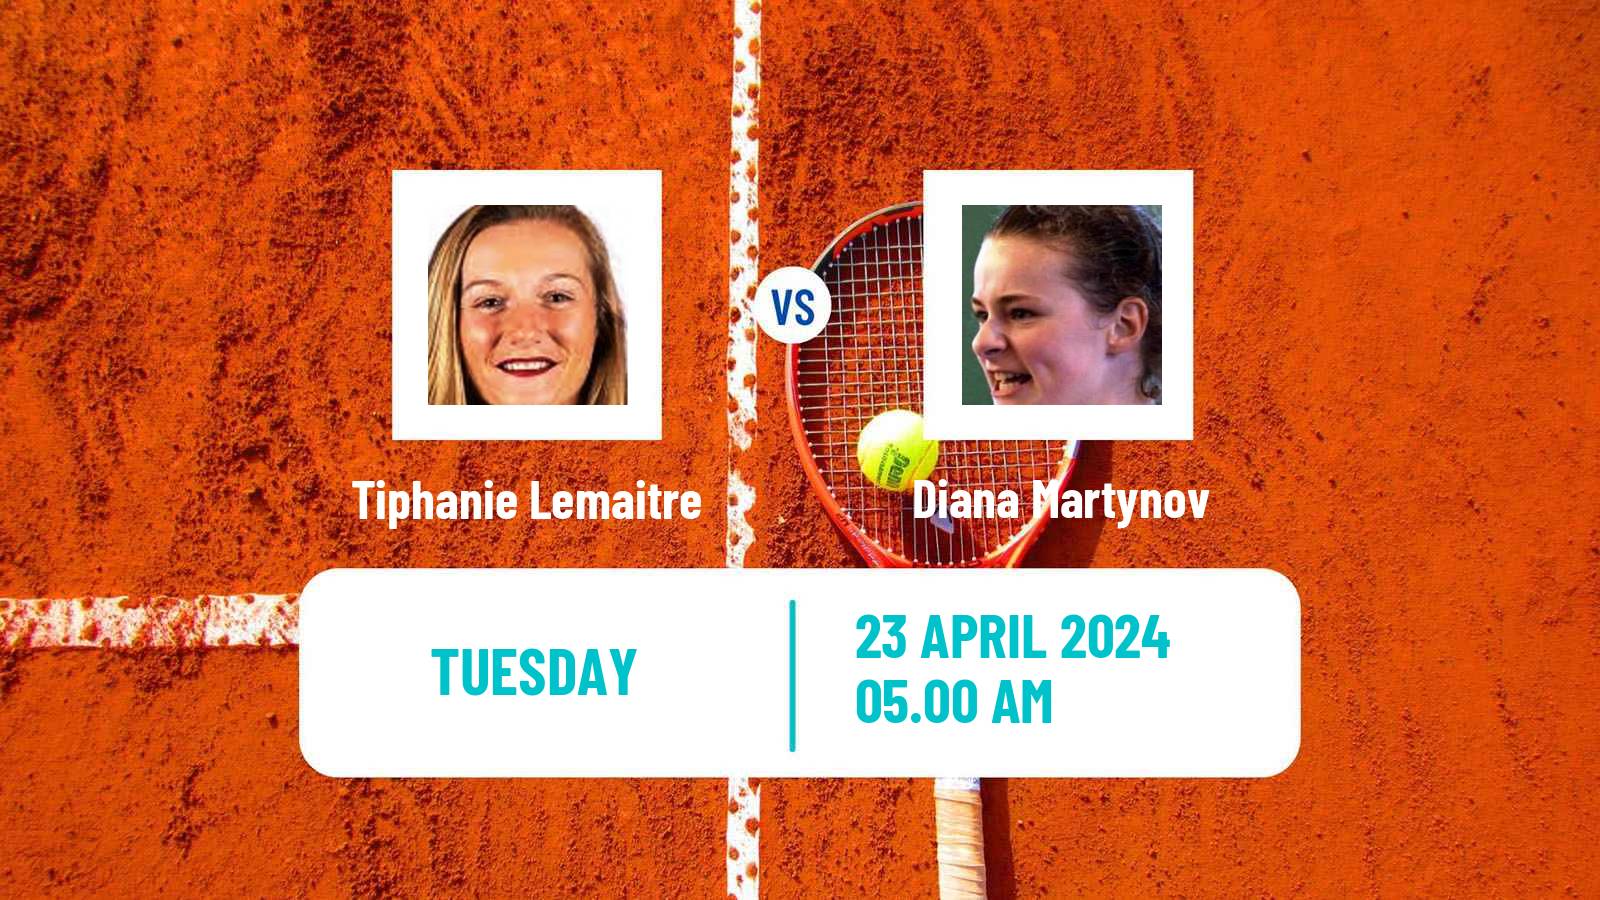 Tennis ITF W35 Hammamet 6 Women Tiphanie Lemaitre - Diana Martynov